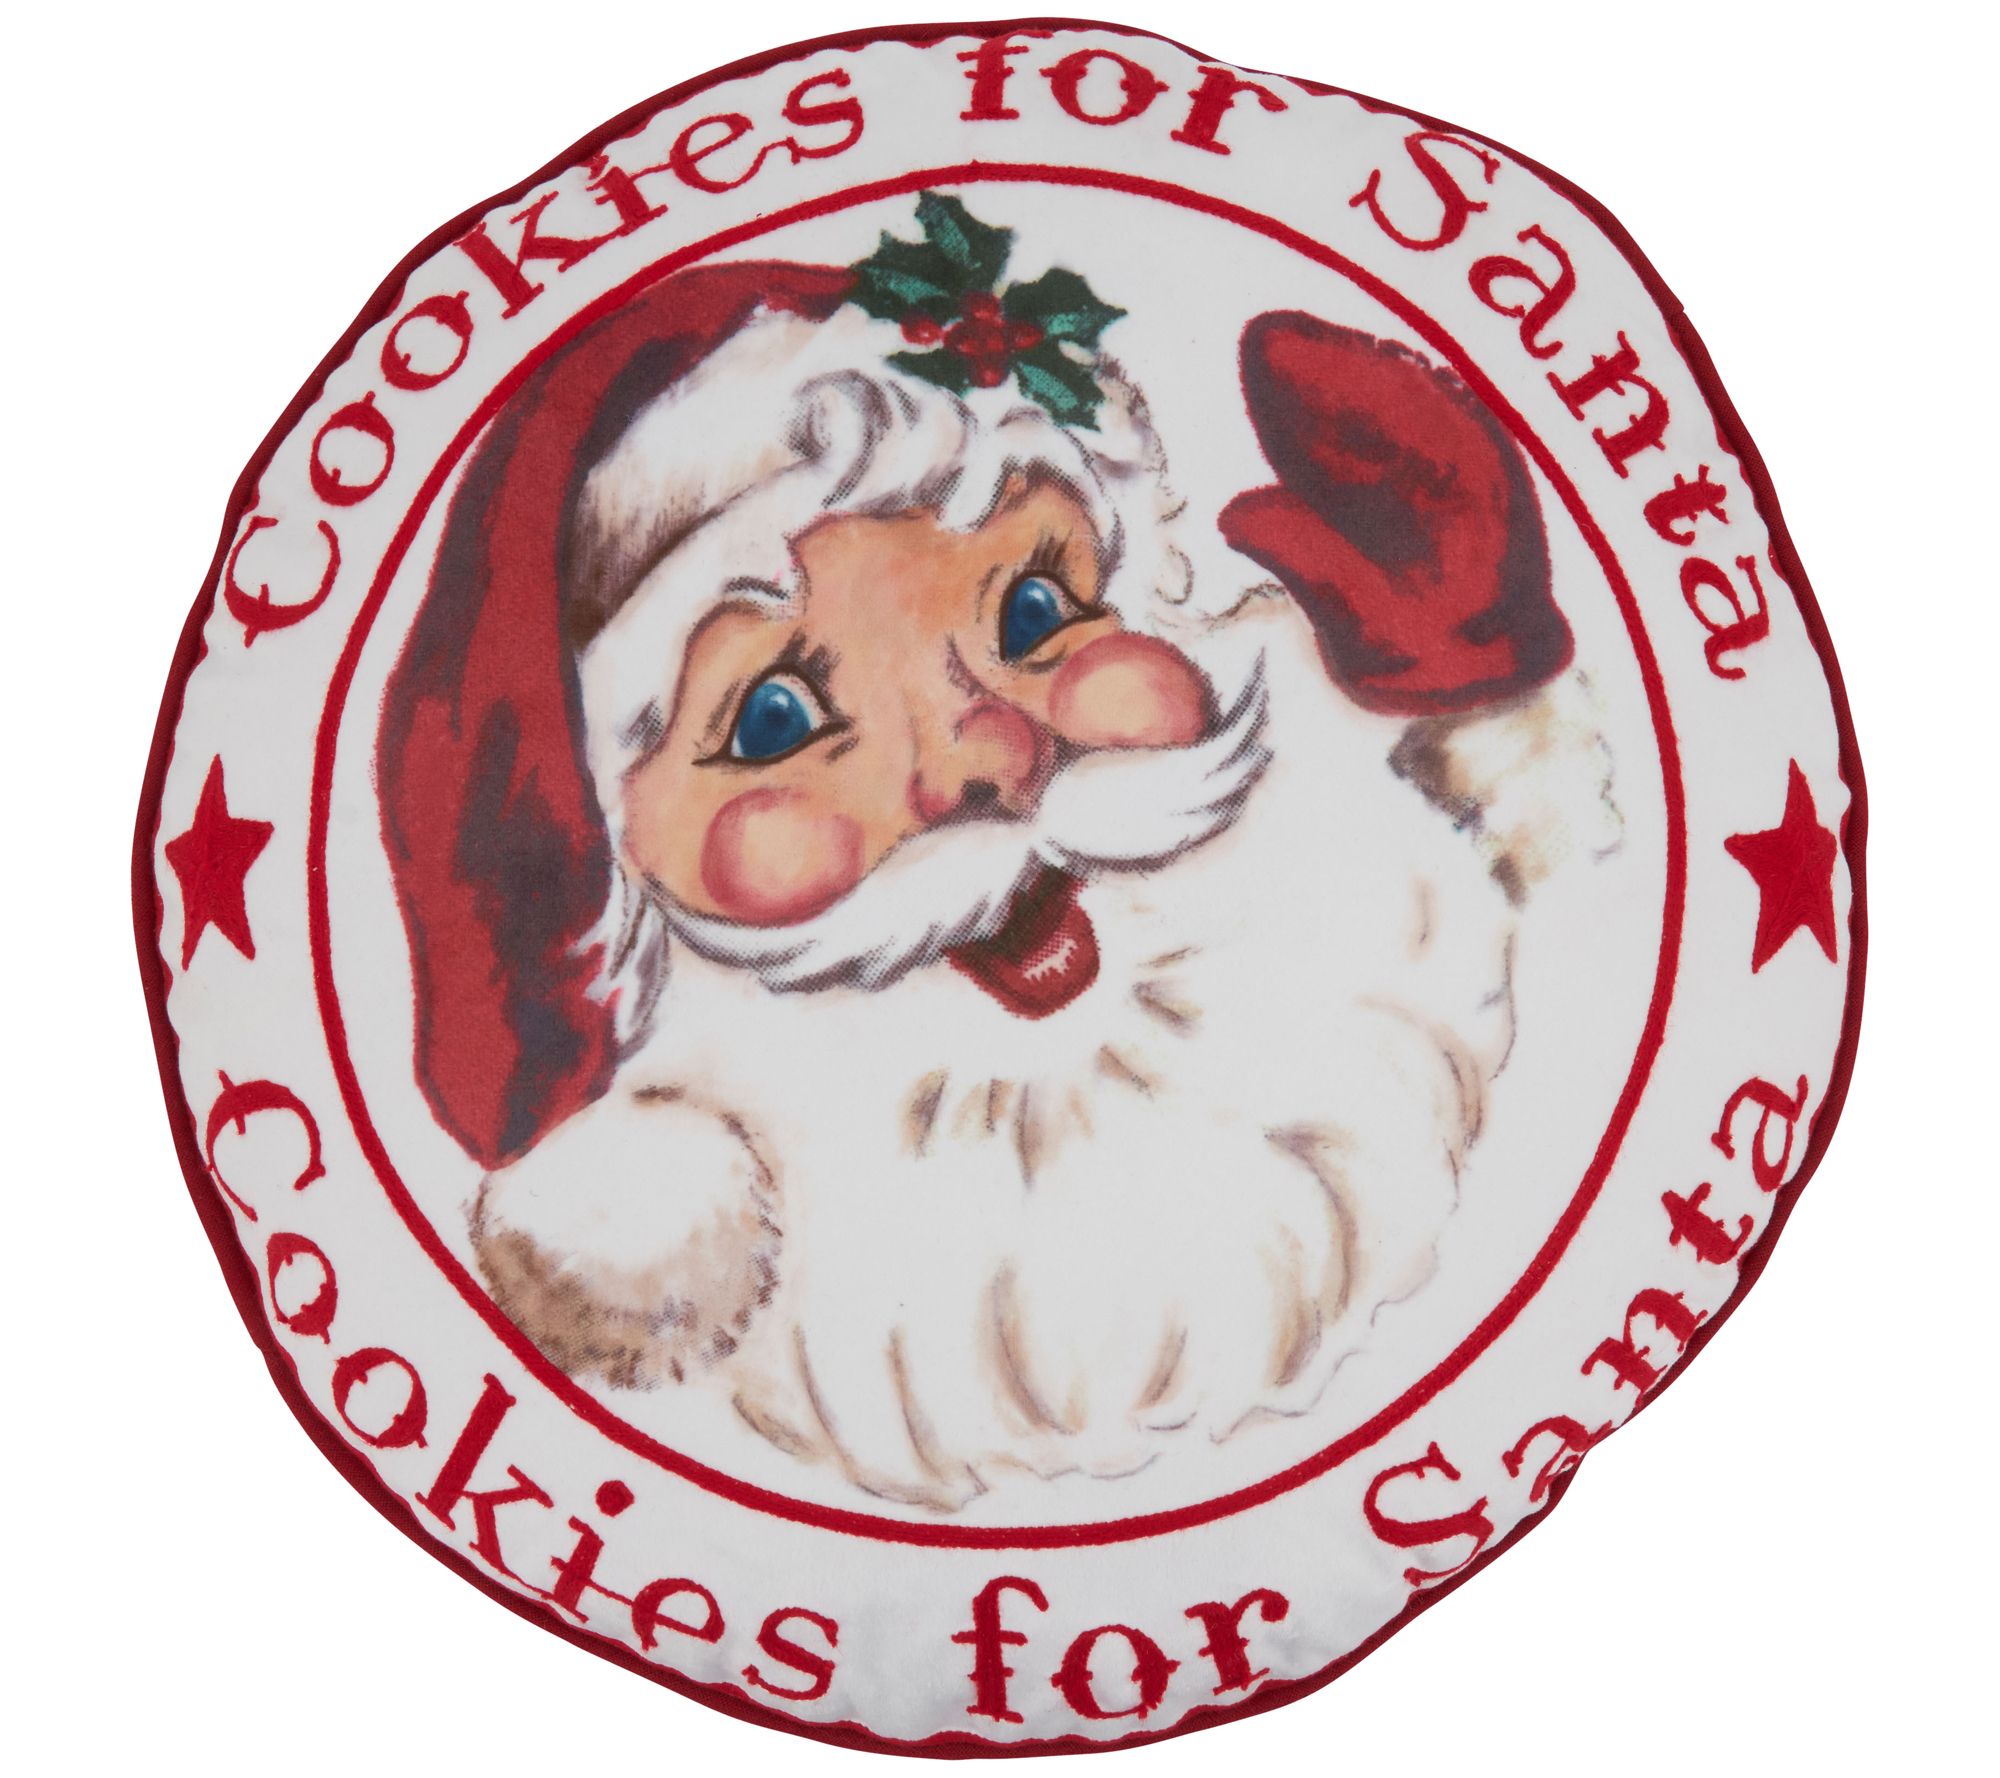 Christmas Cookie Sticker 49